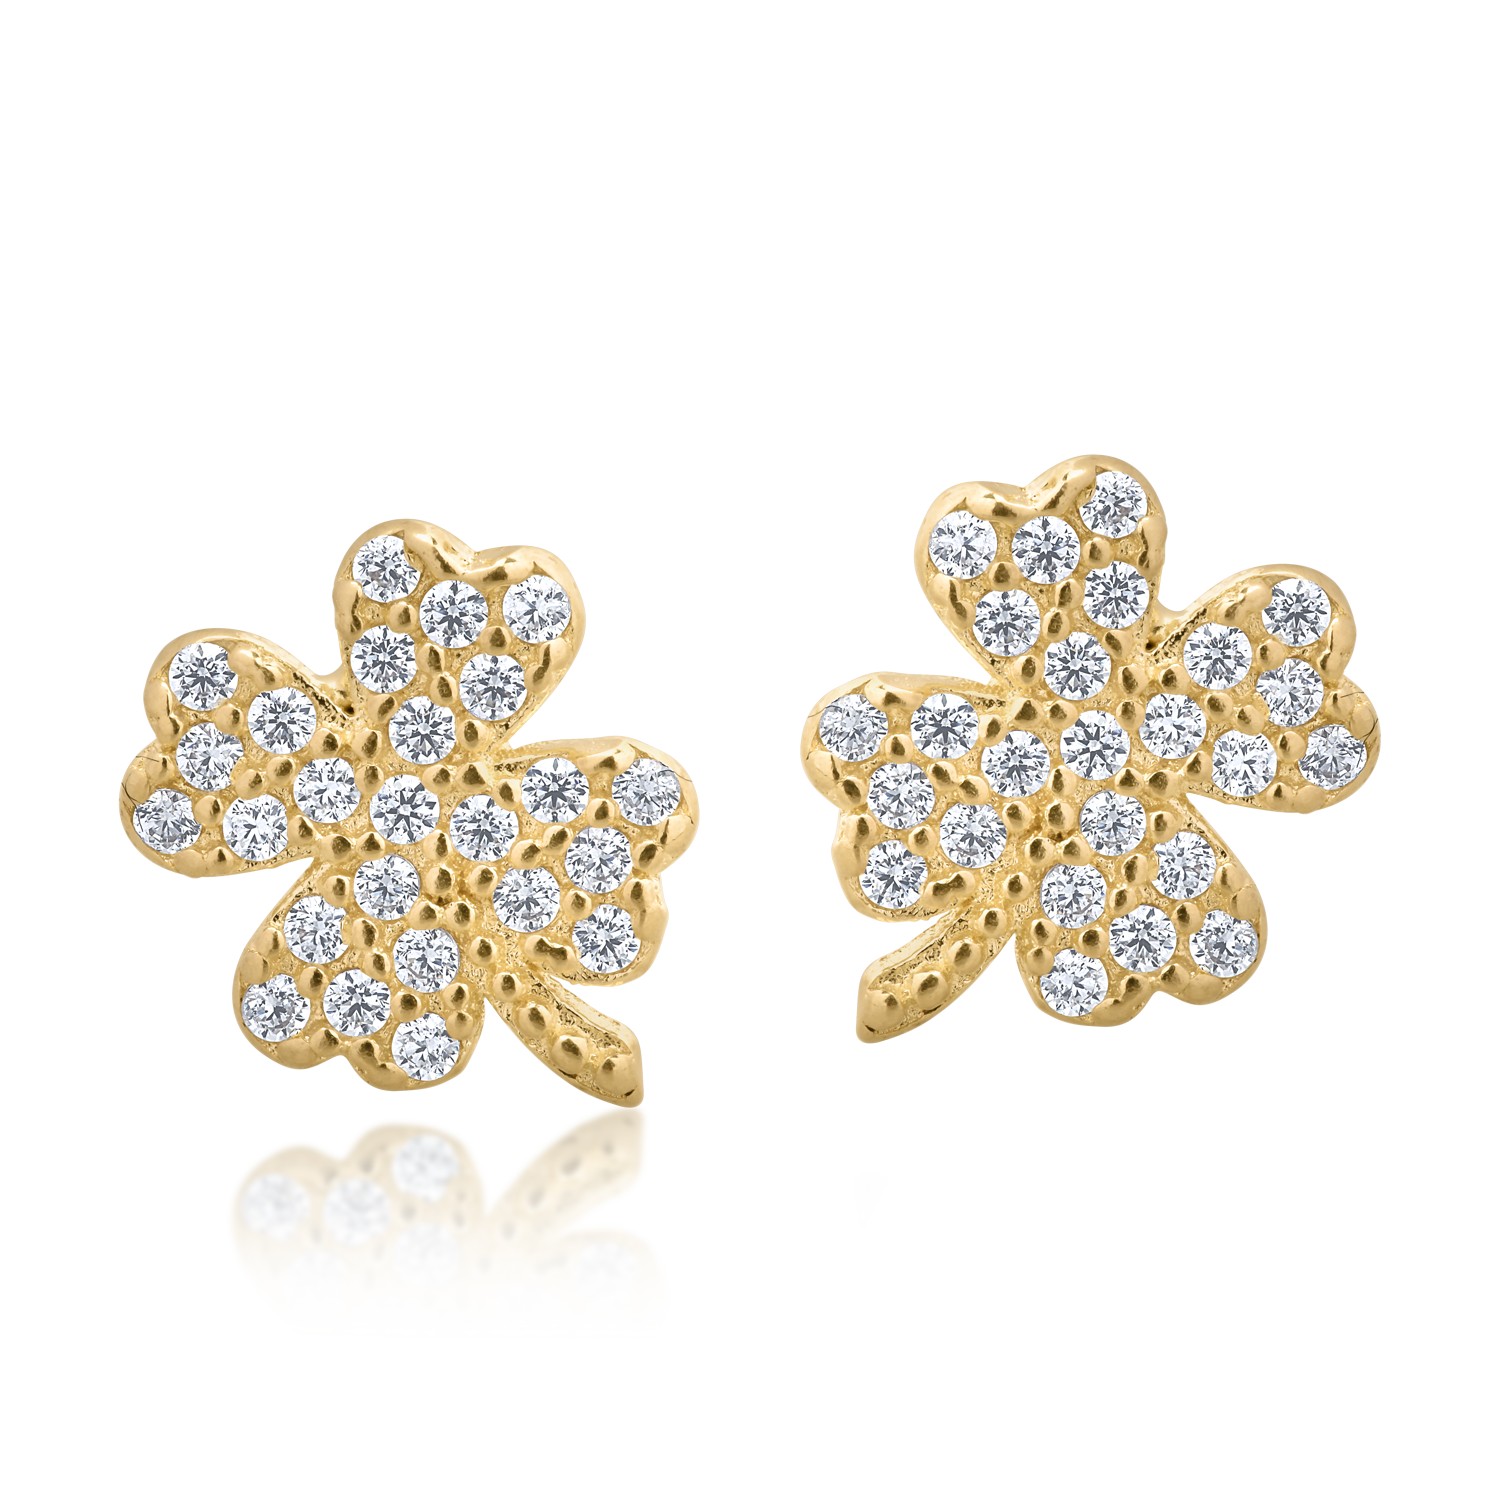 14K yellow gold clover earrings